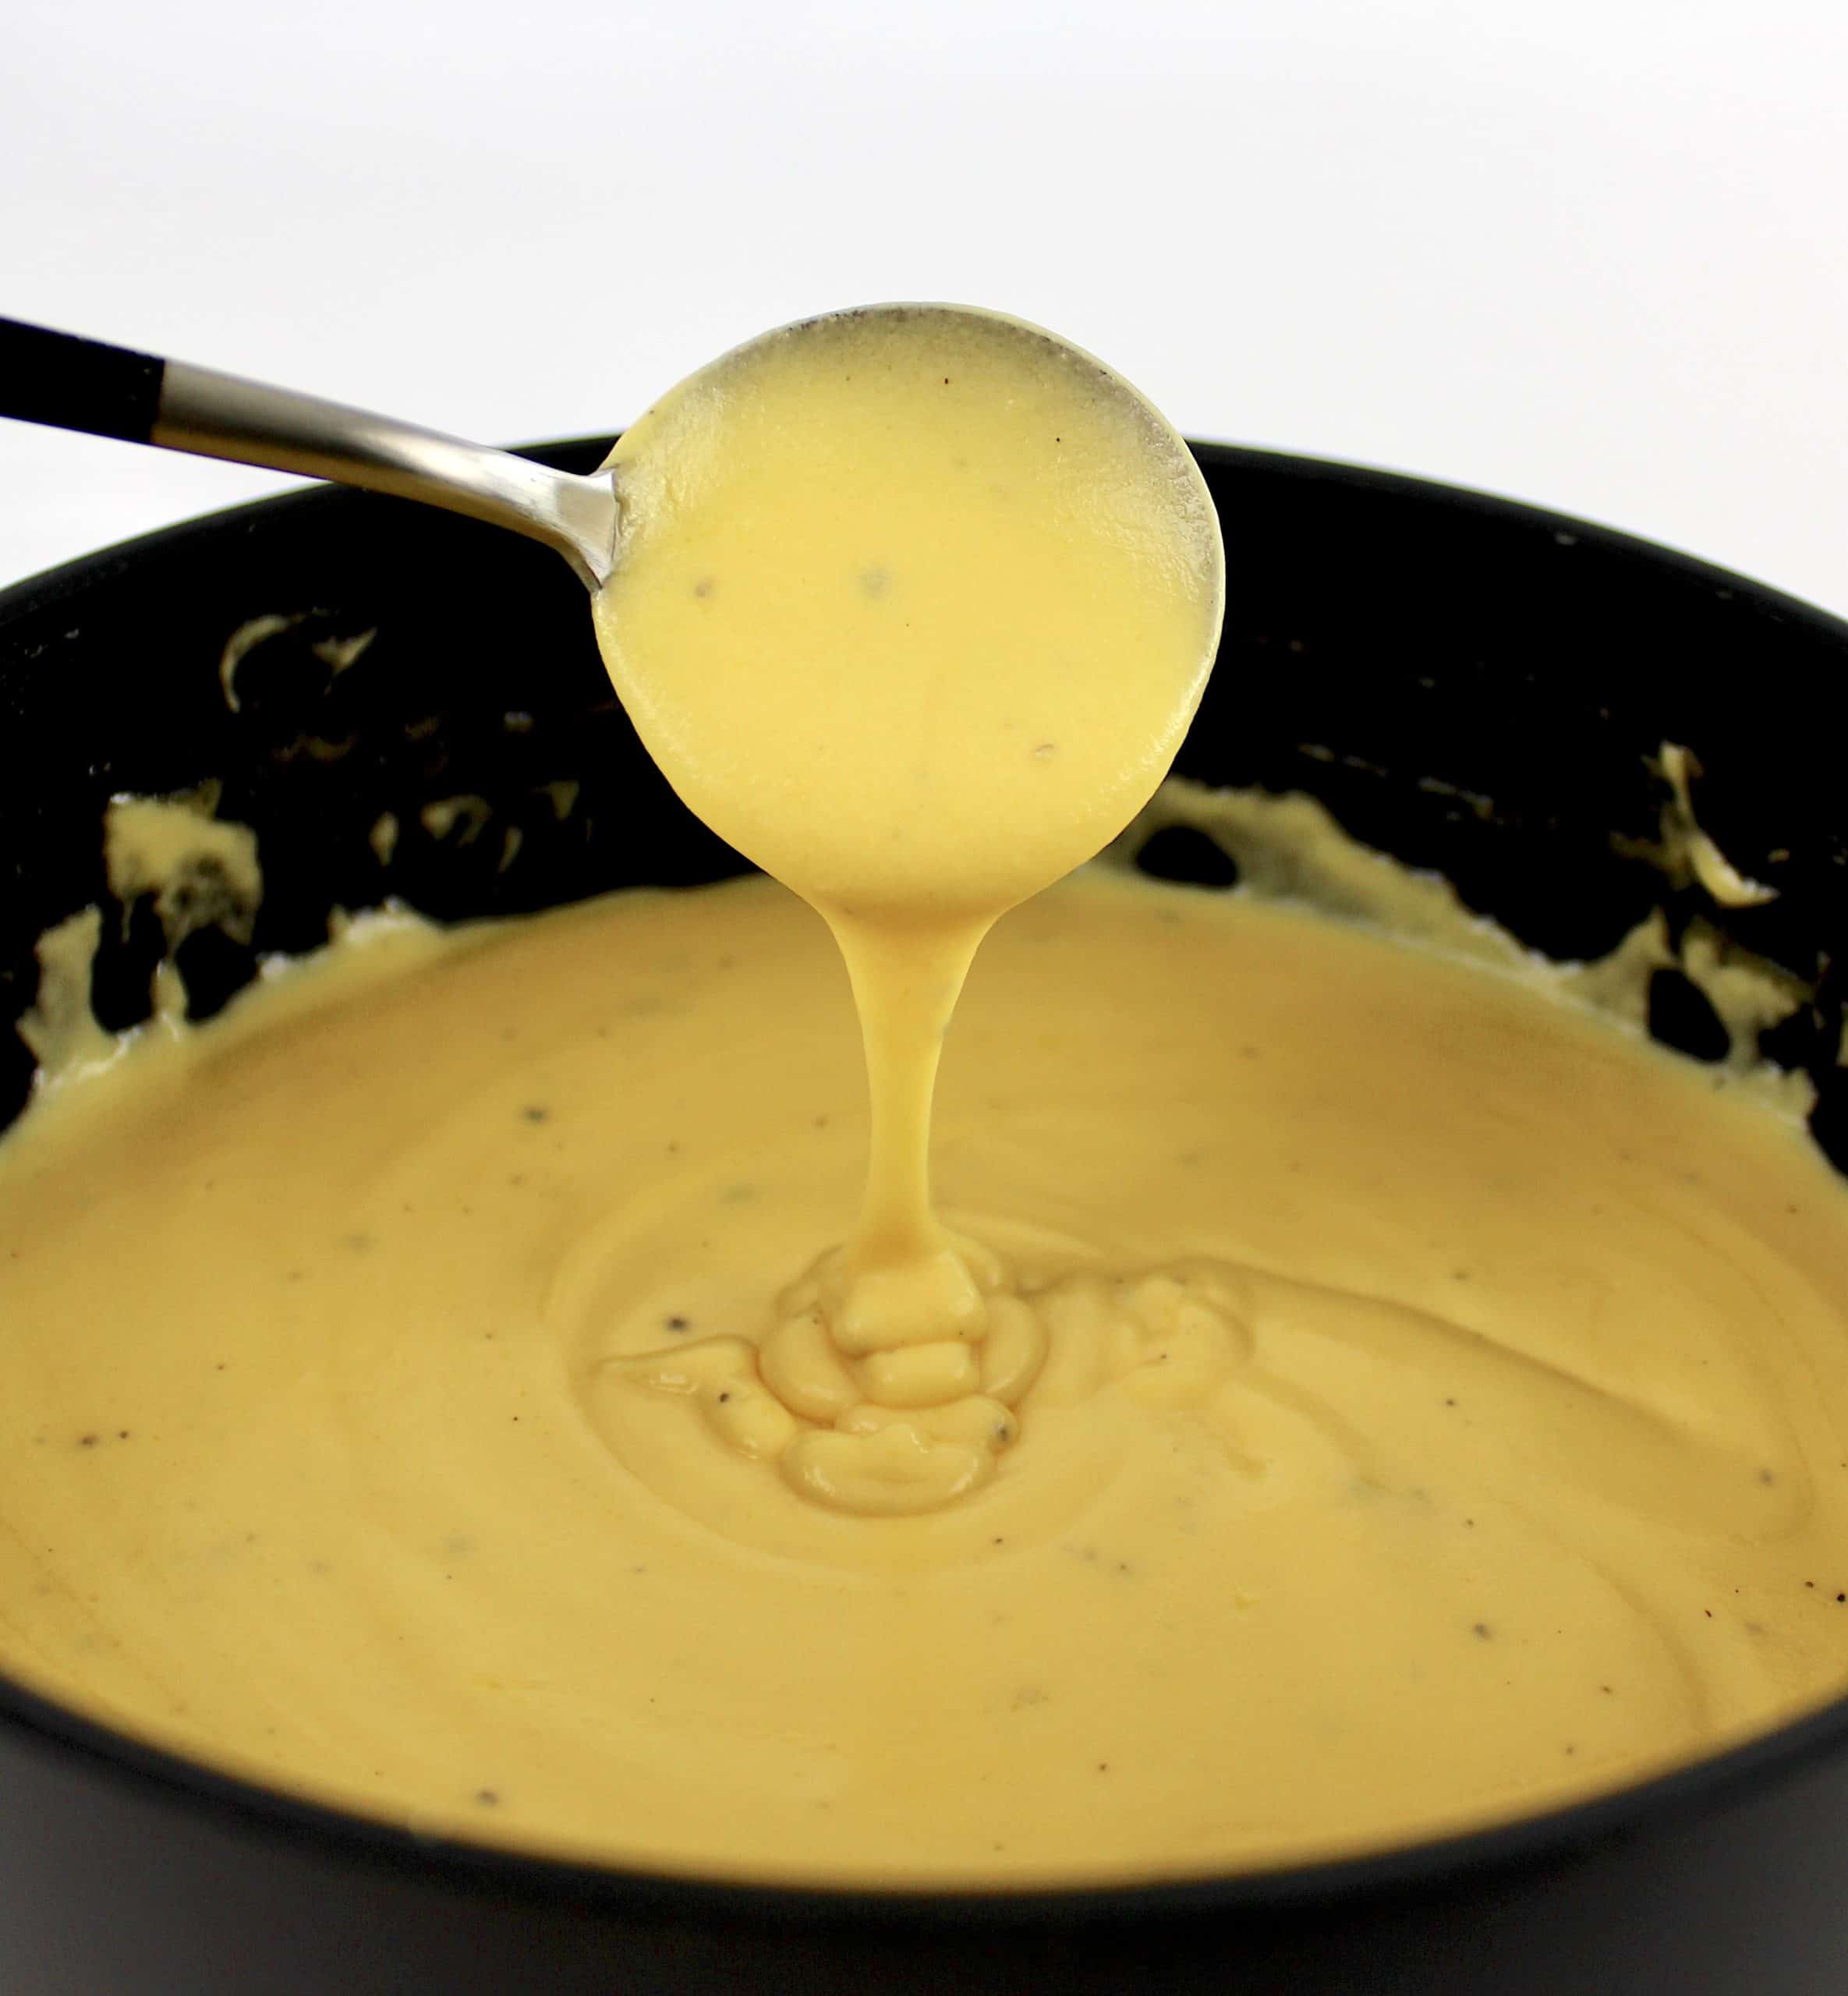 cauliflower mac and cheese sauce in saucepan being spooned